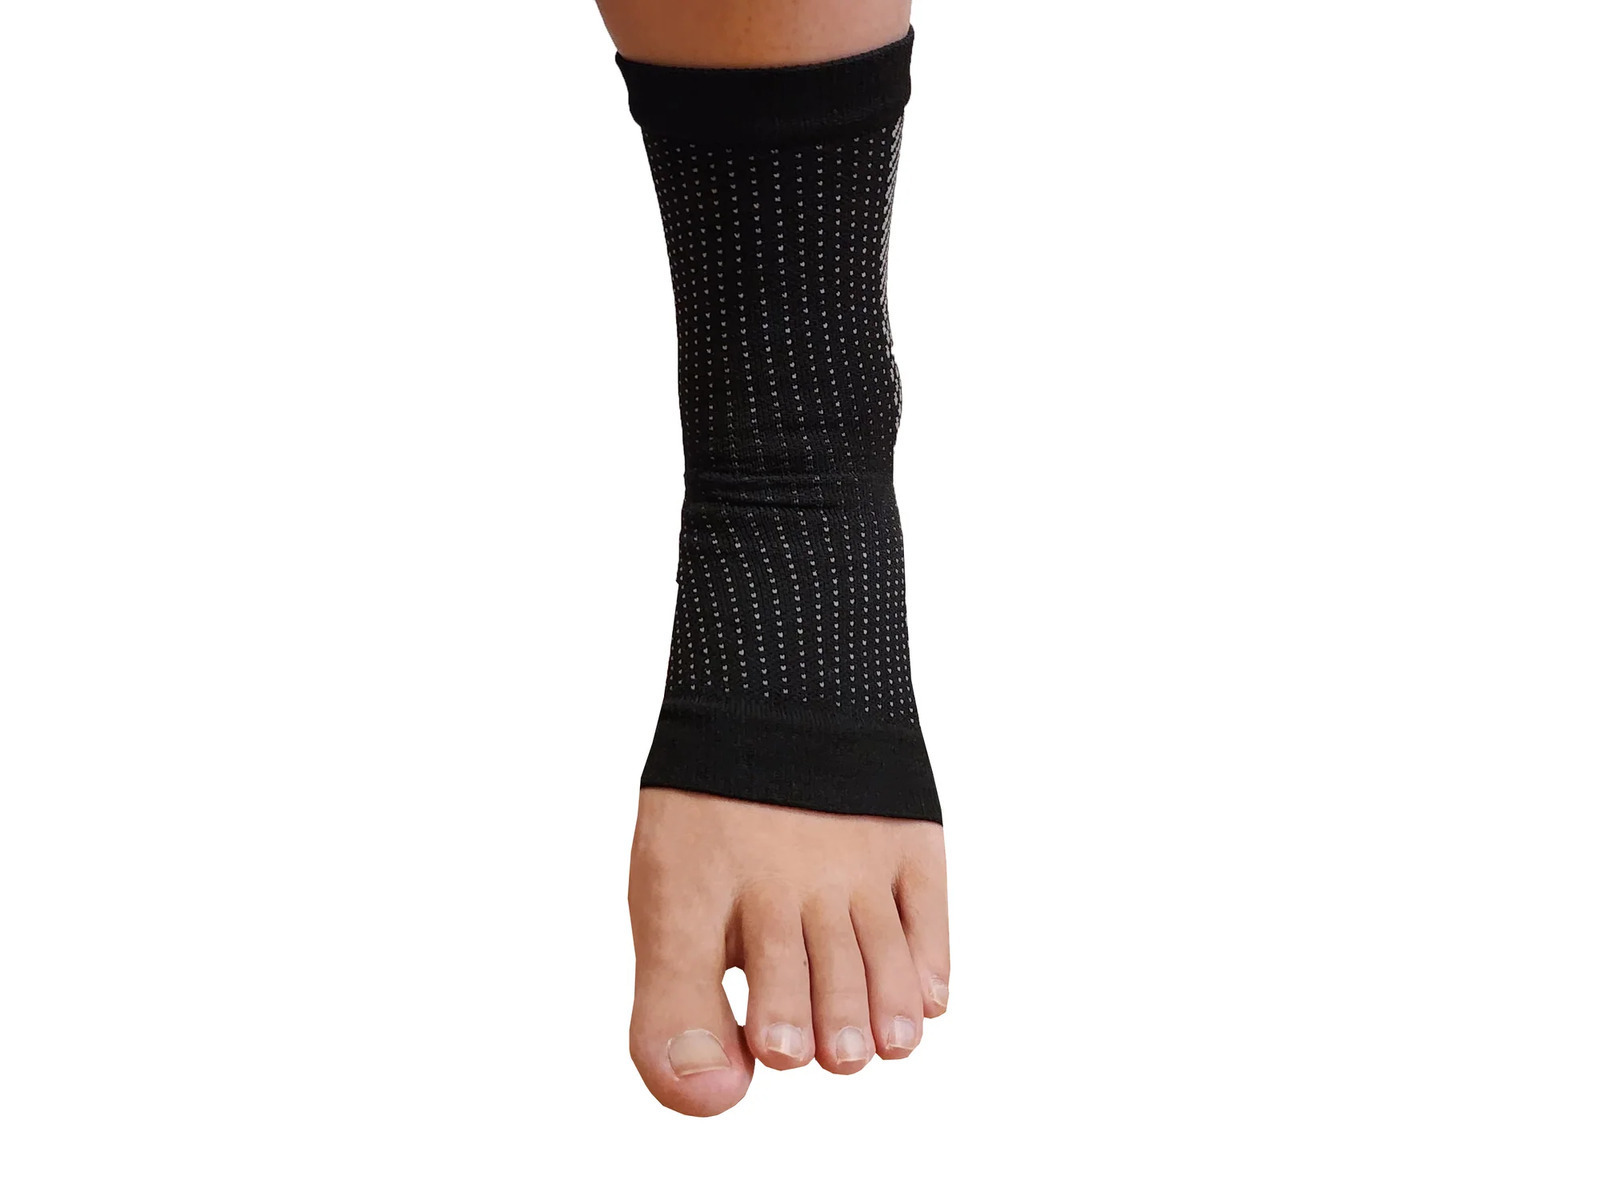 AXIGN Medical Plantar Fasciitis Compression Sock Sleeve - Black - Axign Medical